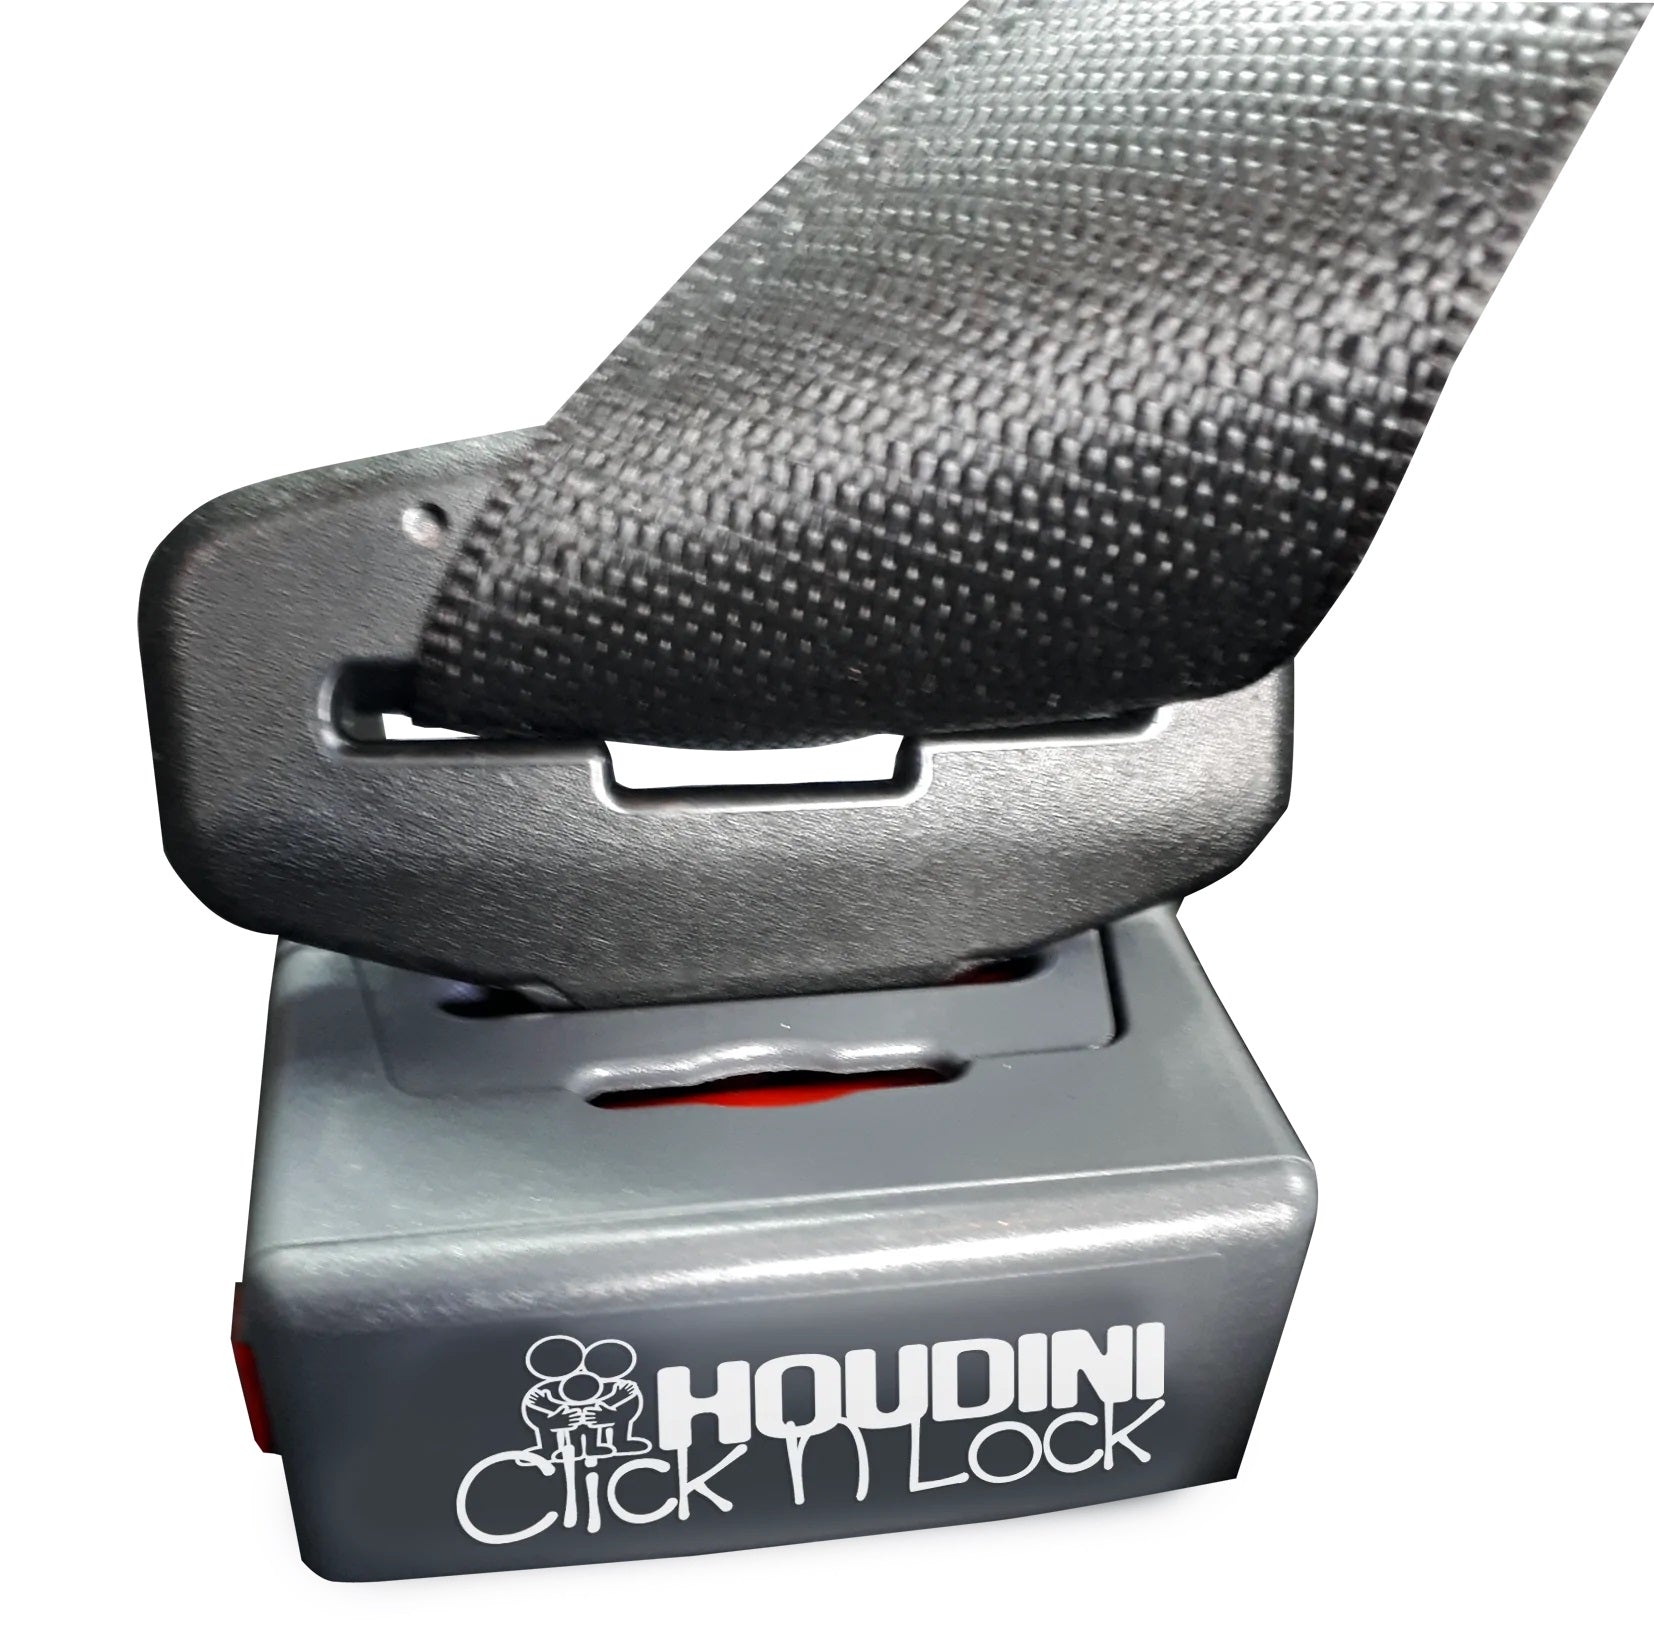 Houdini Stop Click N Lock